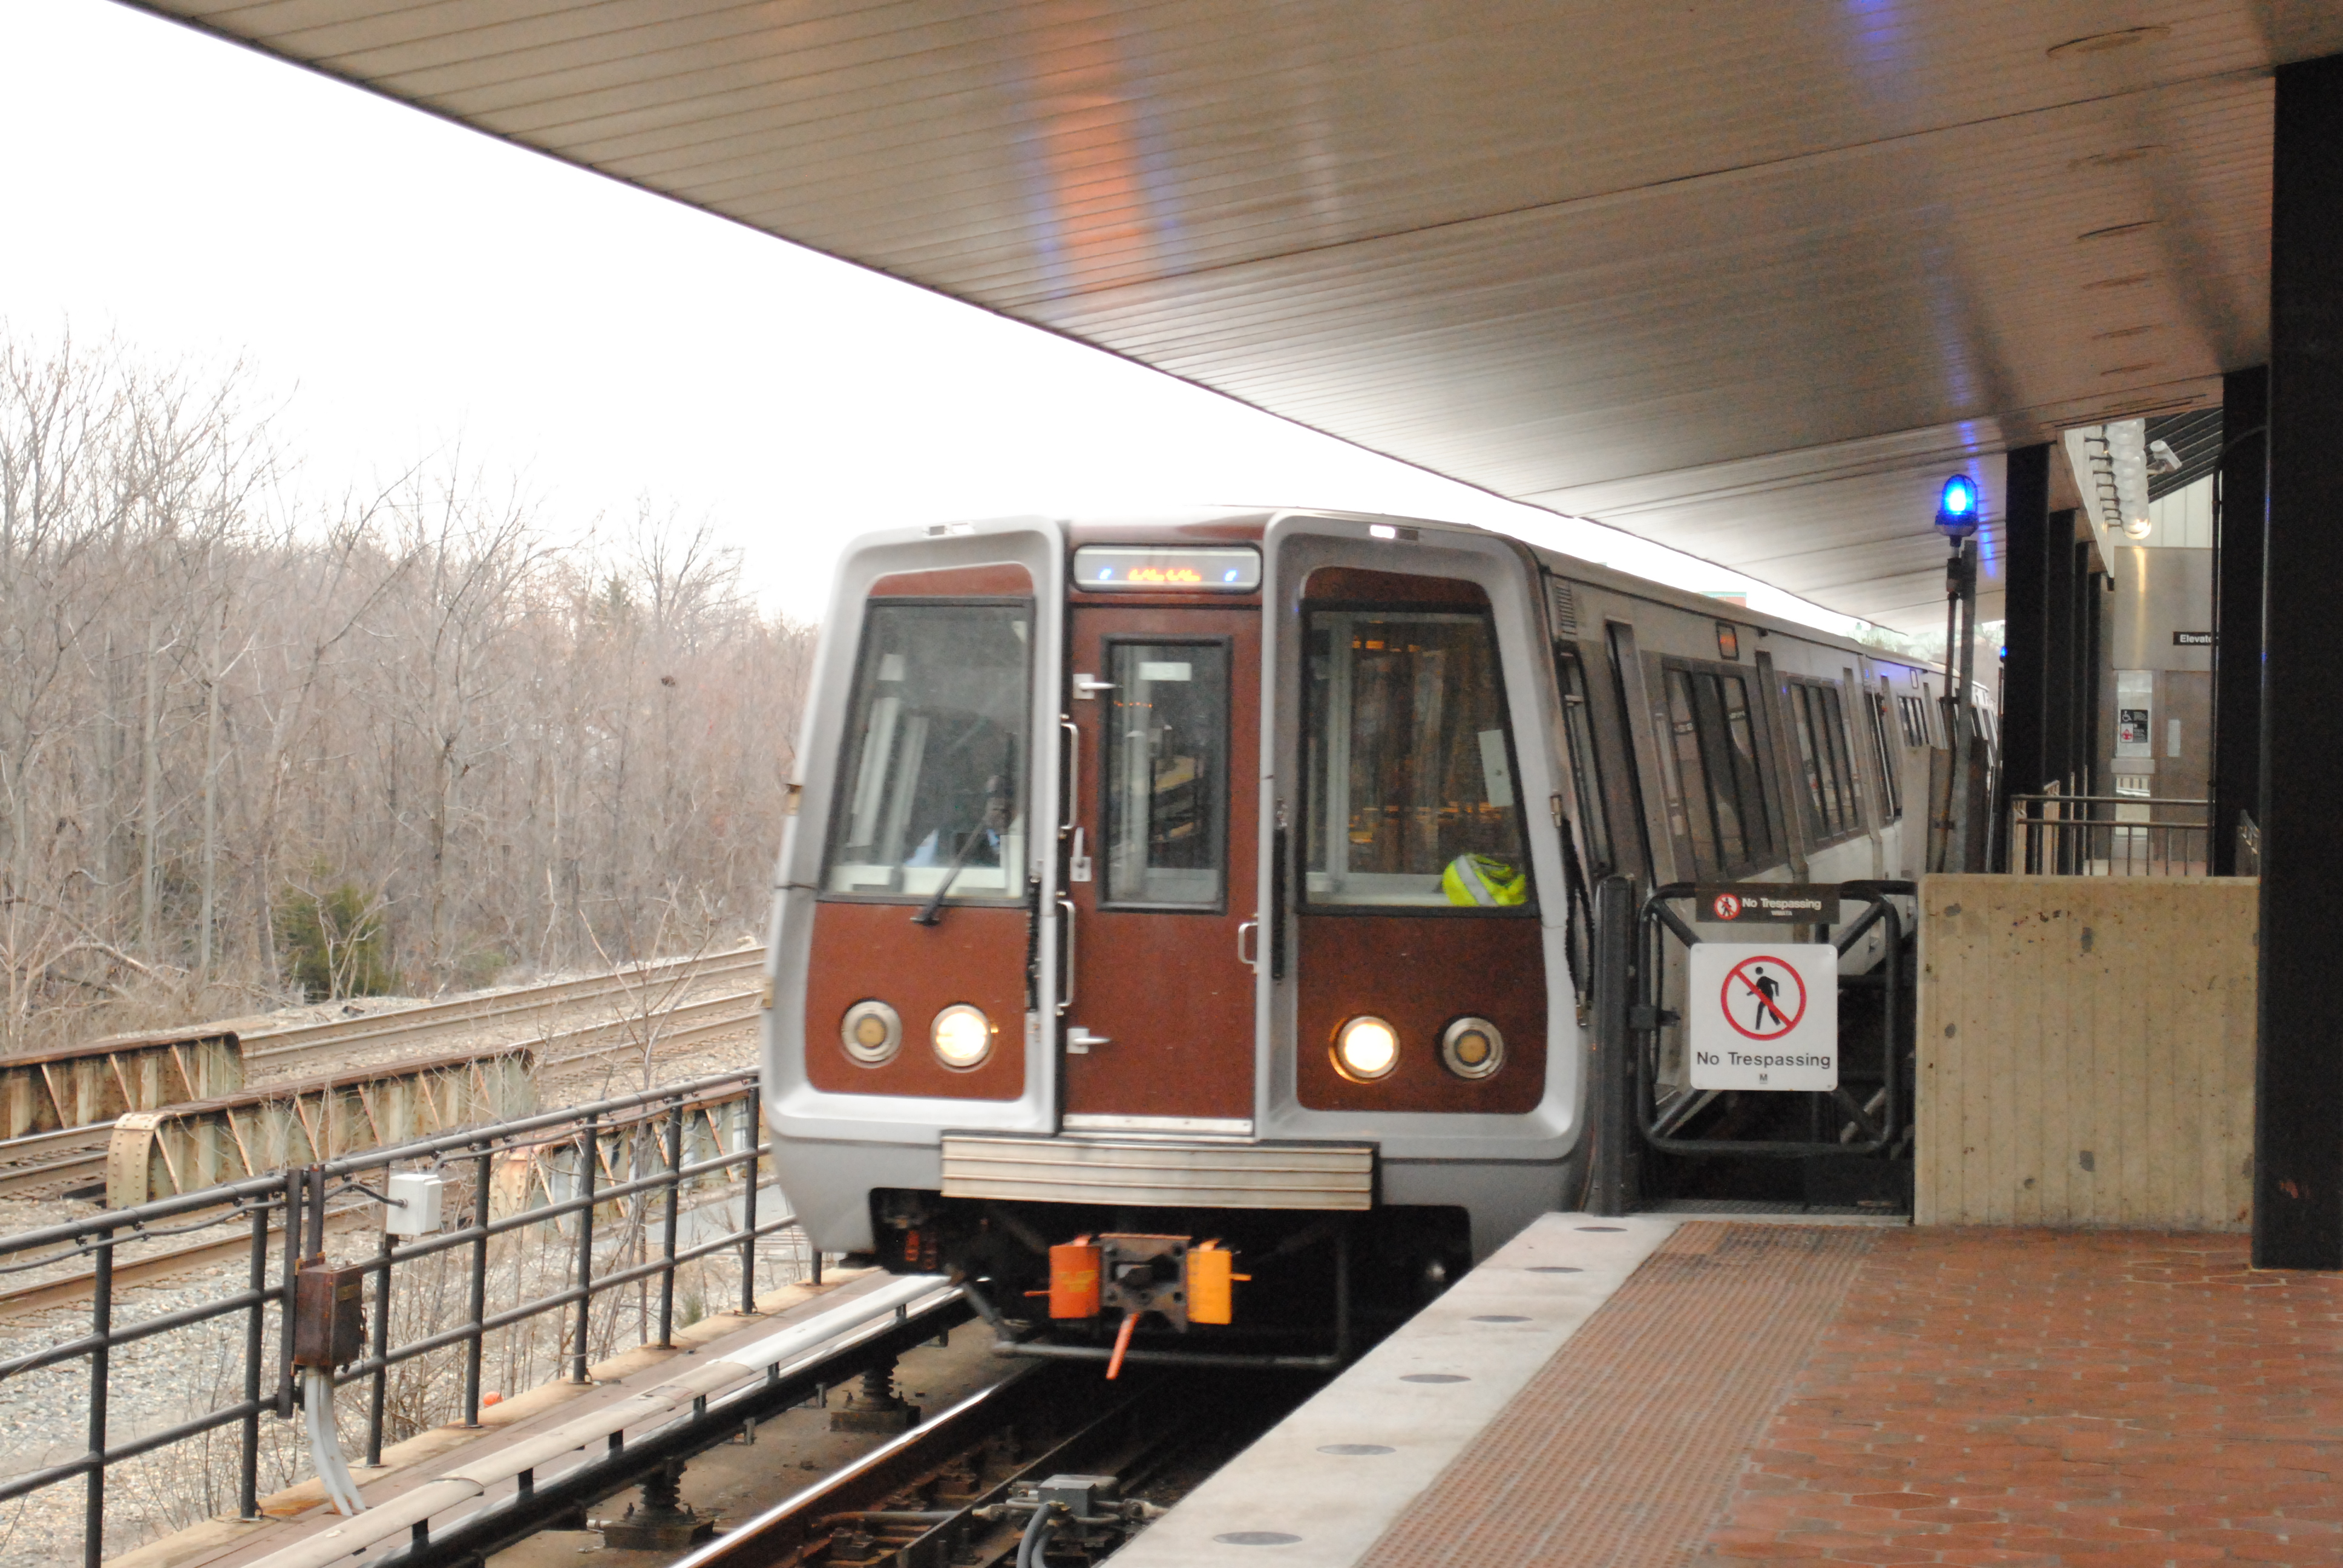 Opinion: Doors closing on Metro’s credibility